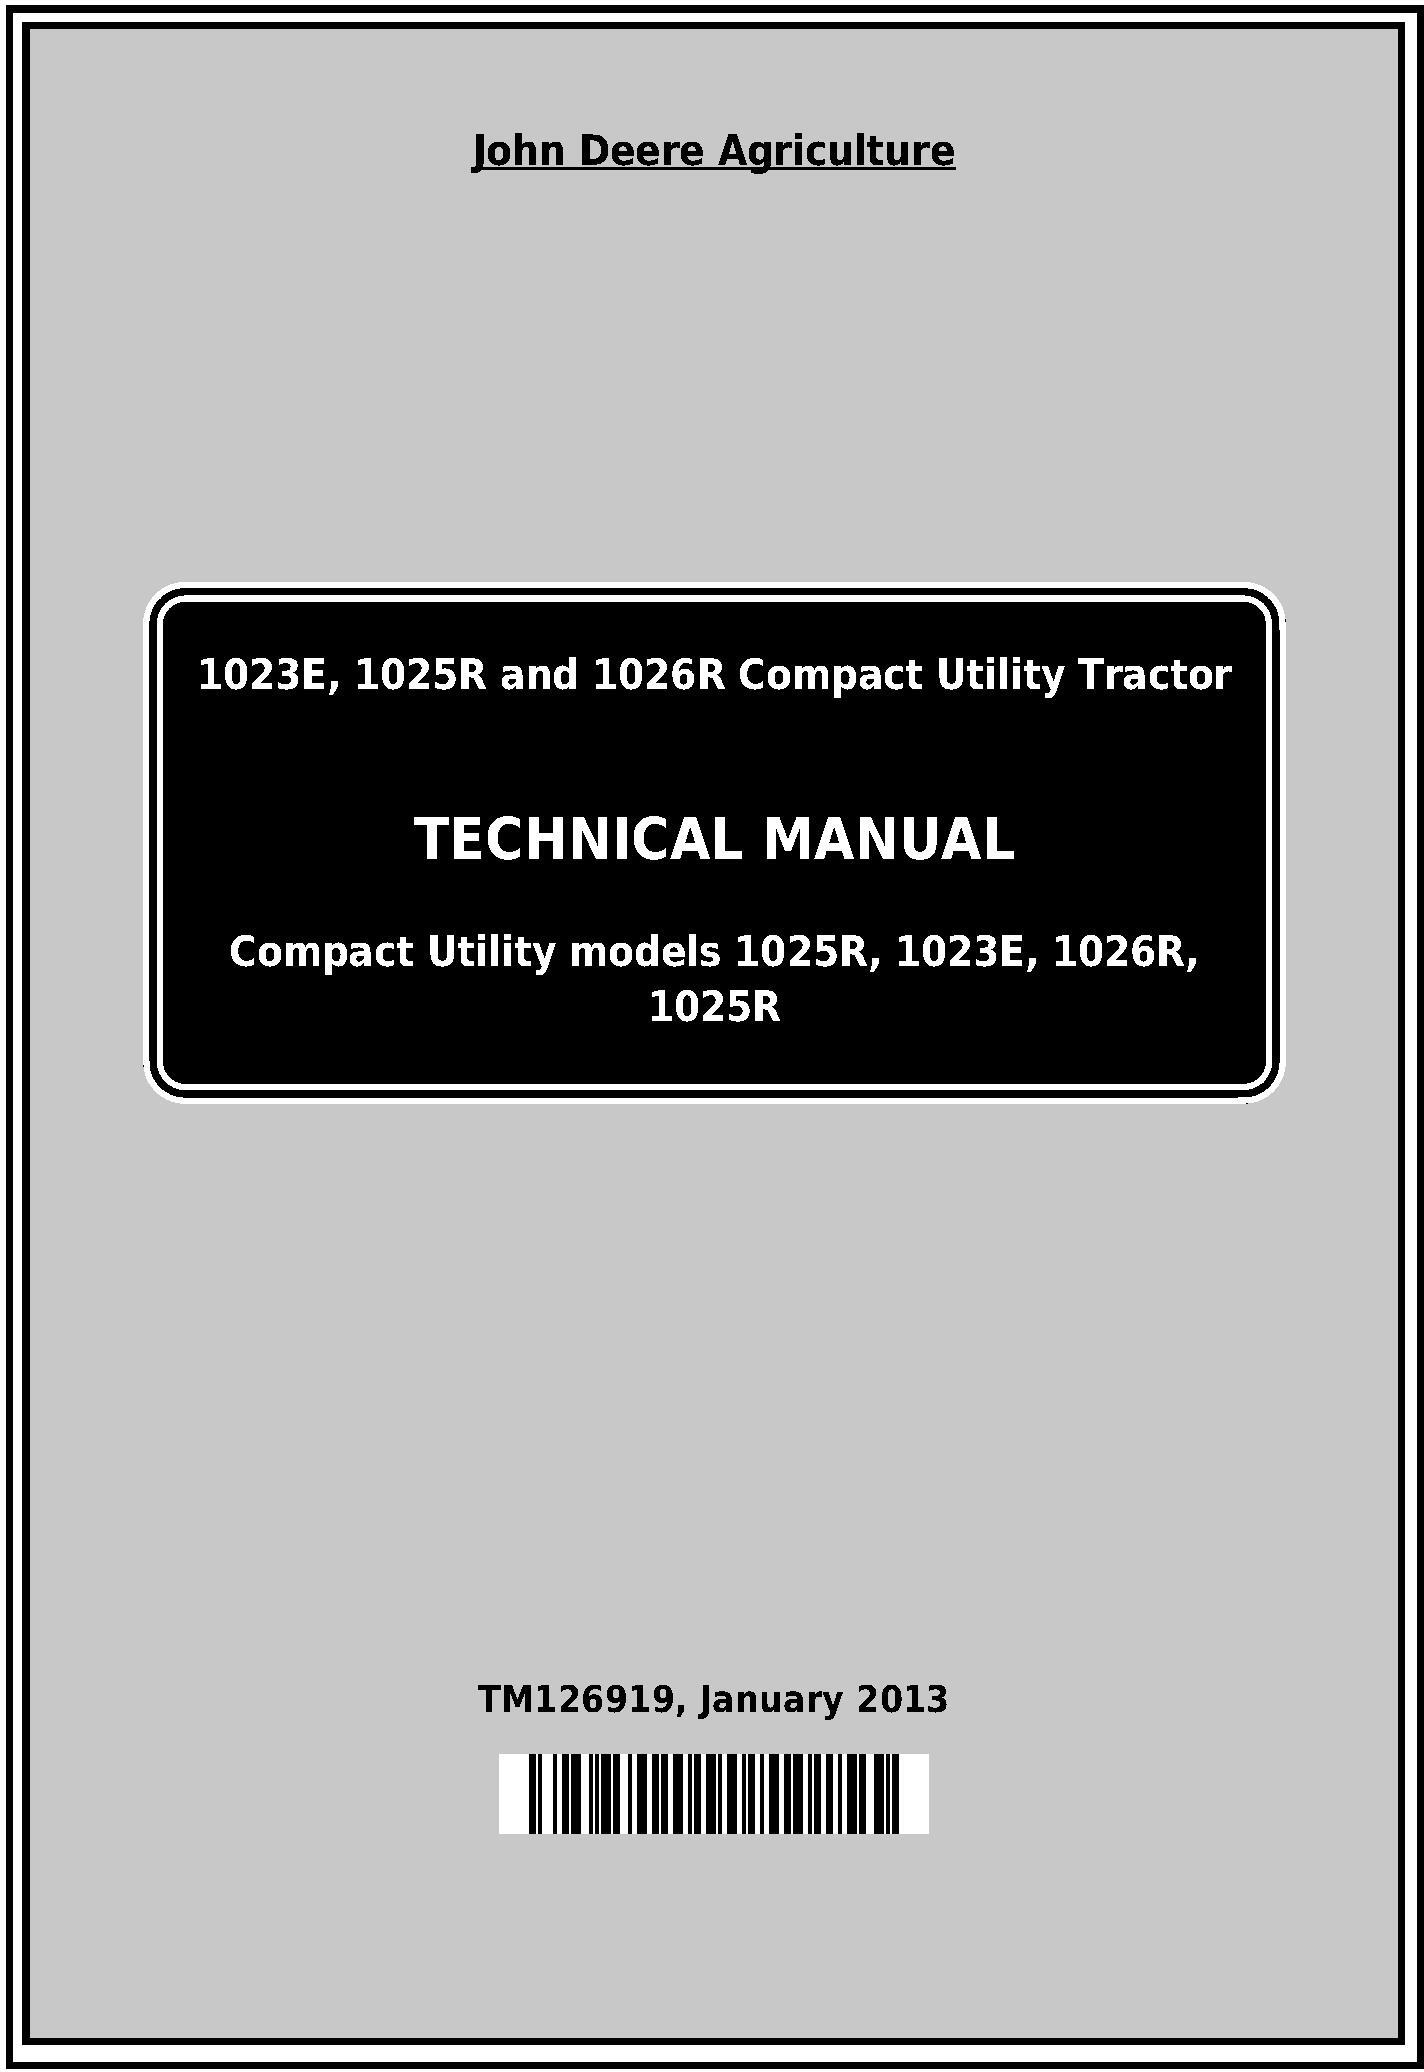 John Deere 1023E 1025R 1026R Compact Utility Tractor Technical Manual TM126919